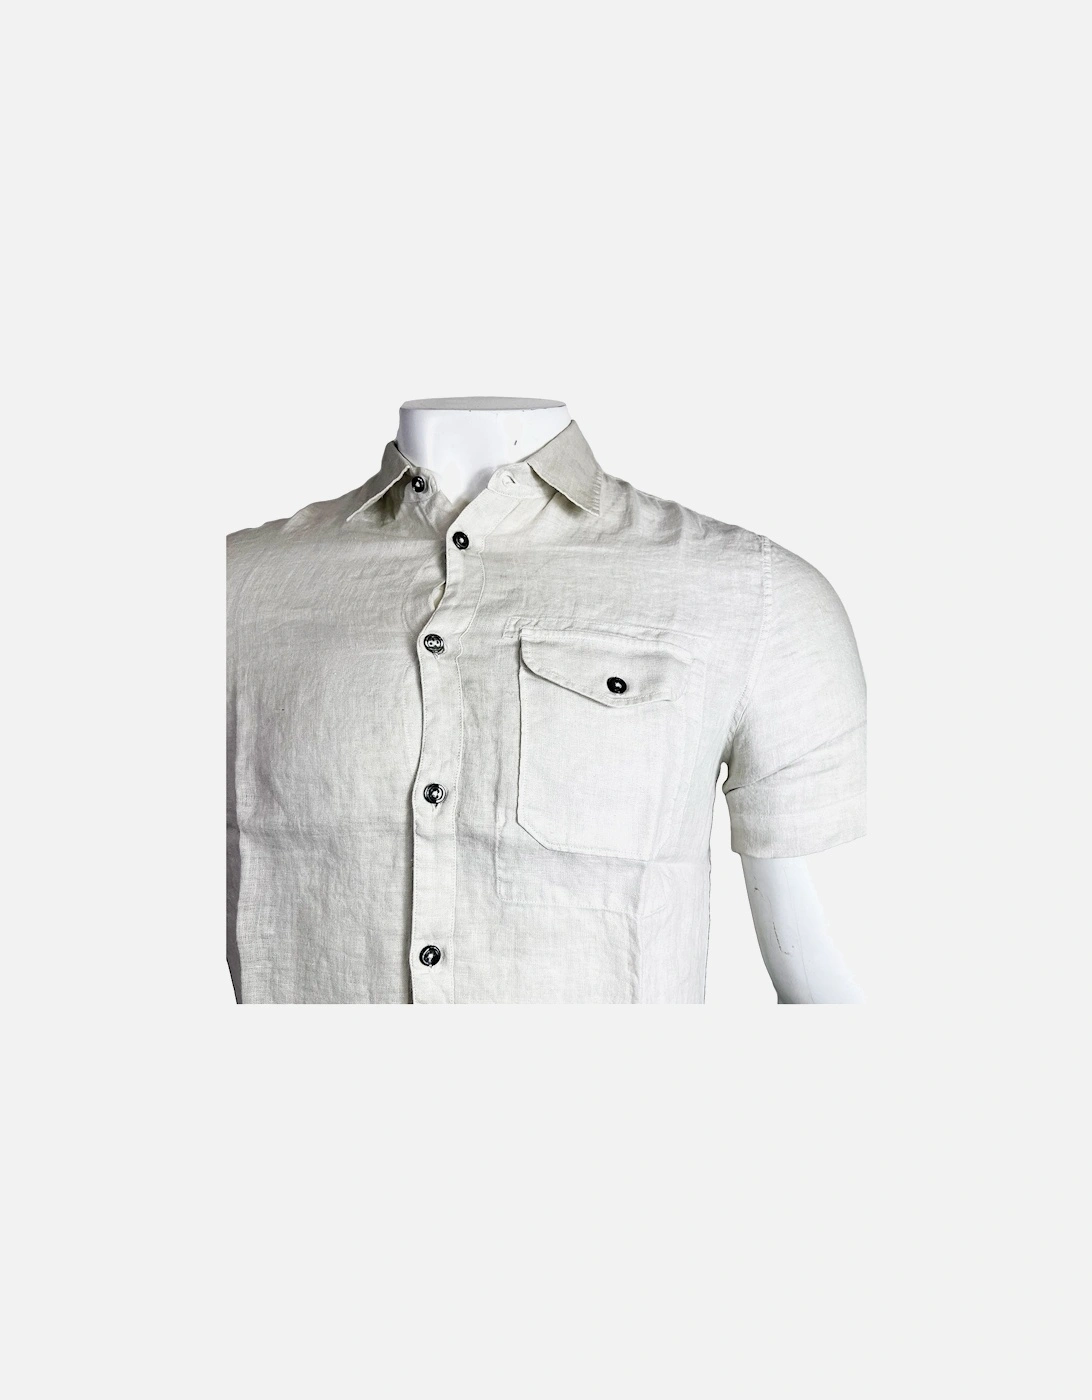 C.P.Company Short-Sleeve shirt Beige